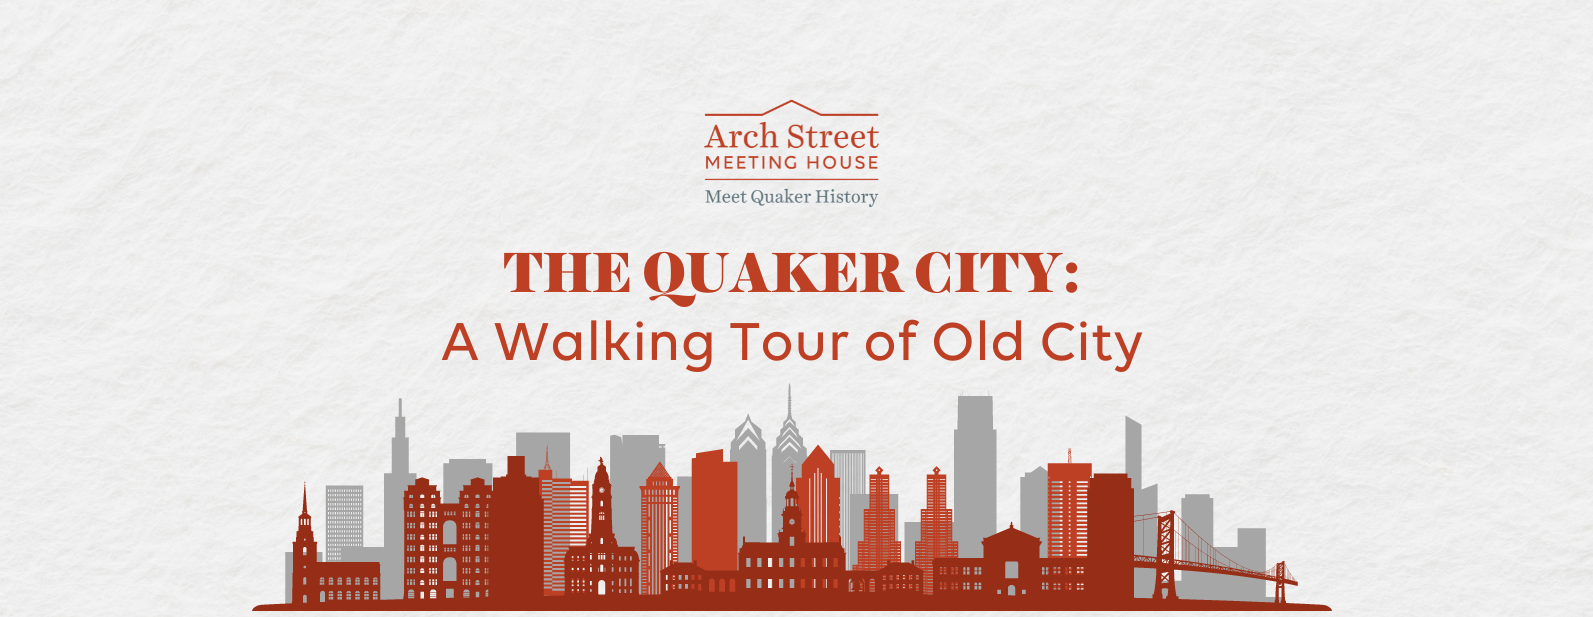 The Quaker City: A Walking Tour of Old City, Philadelphia